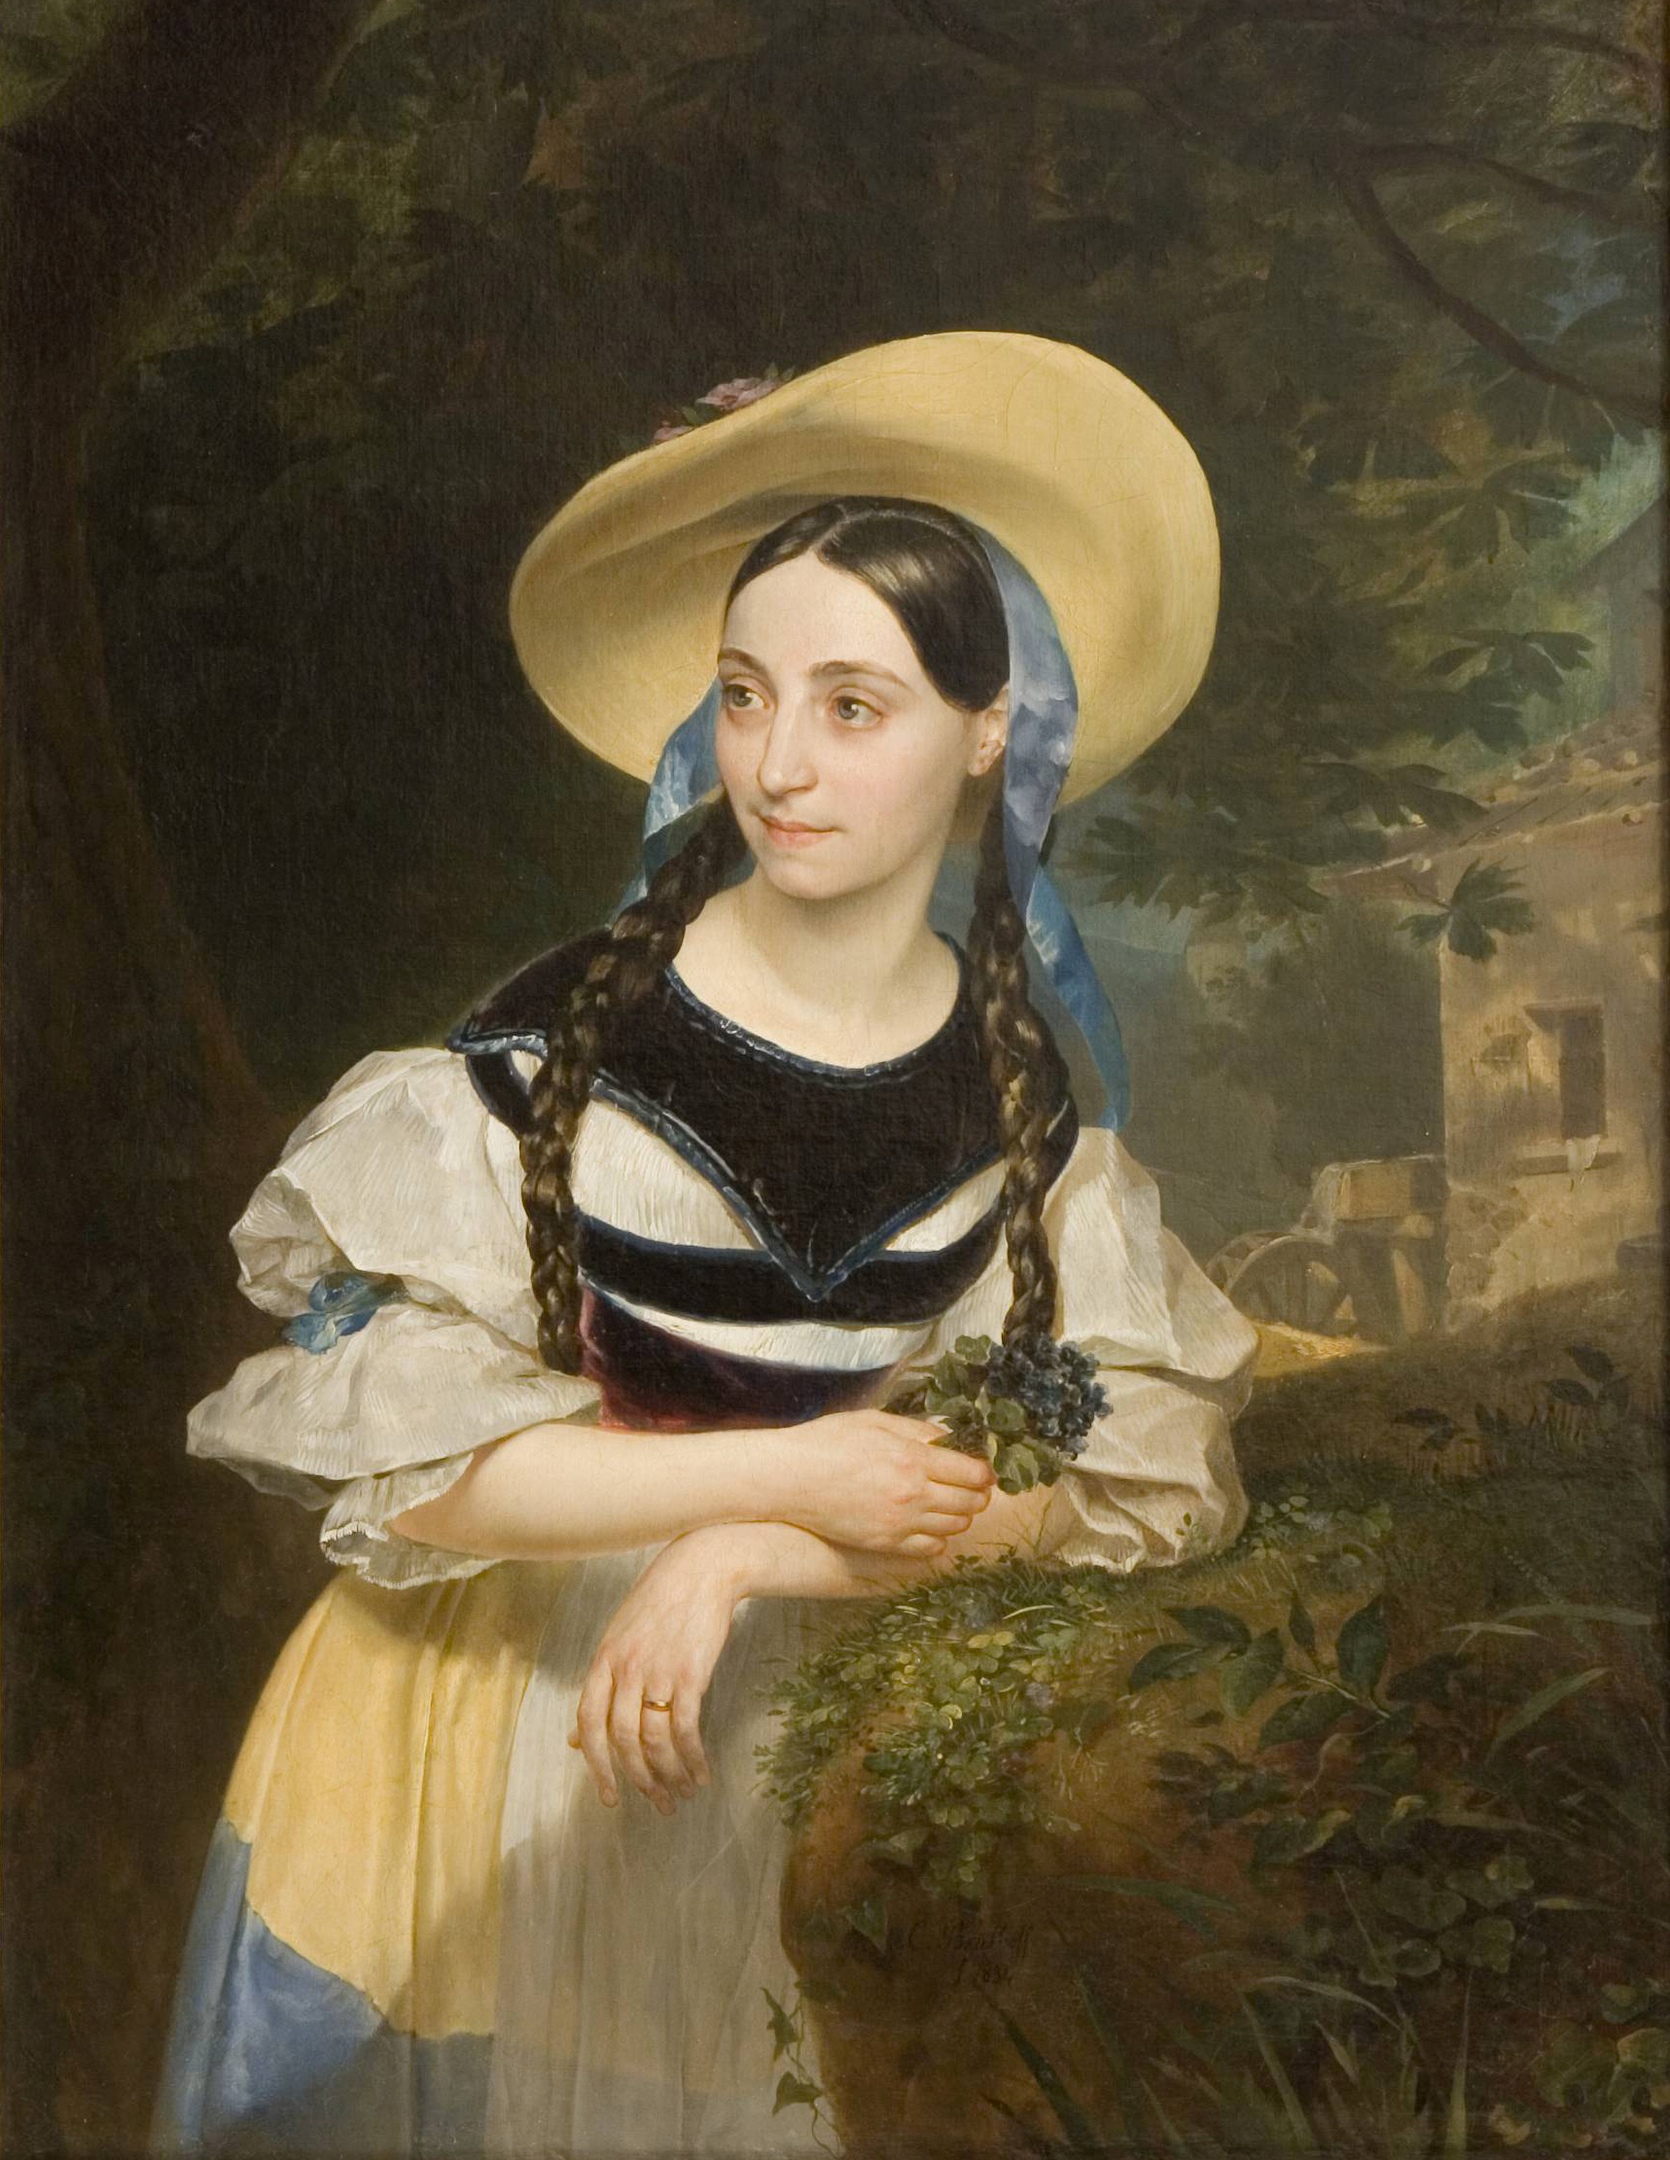 Portrét Fanny Persiani–Tacchinardi v roli Aminy by Karl Bryullov - 1834 